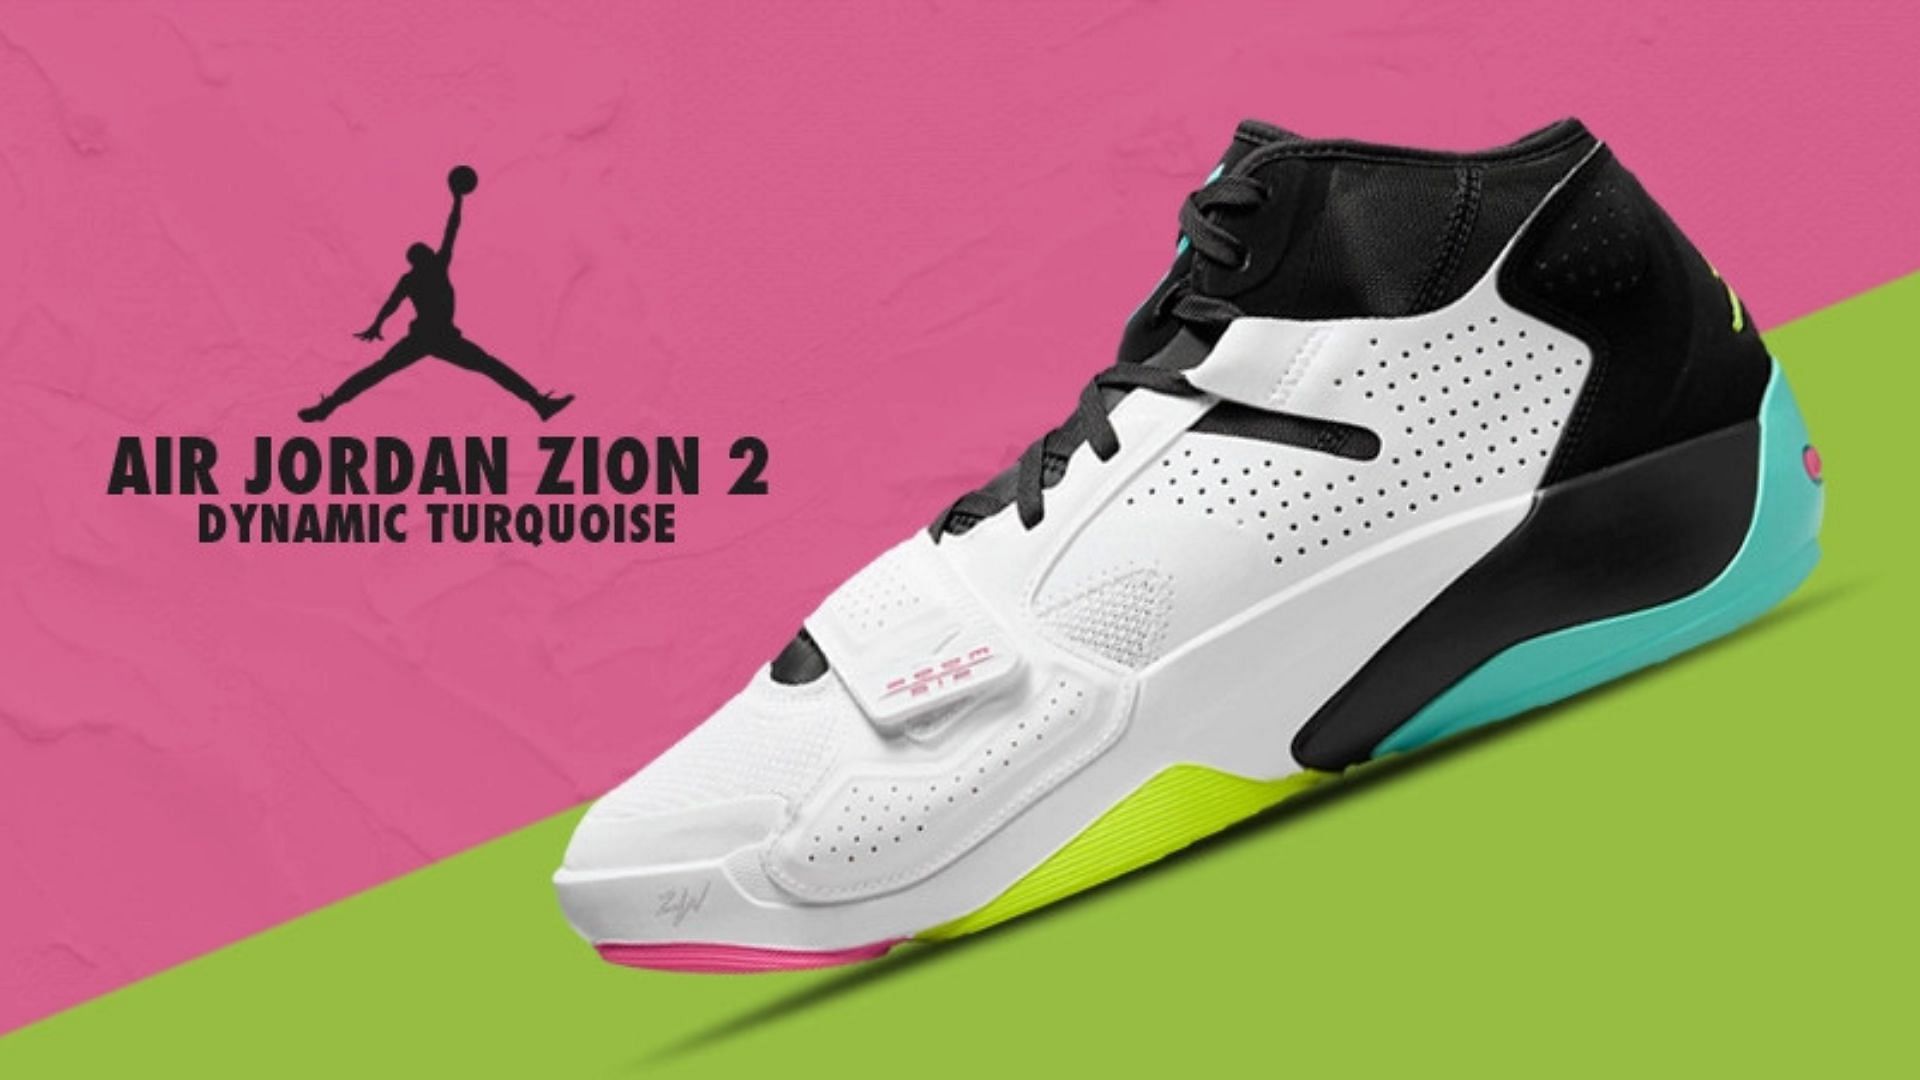 Jordan Zion 2 Dynamic Turquoise colorway (Image via Twitter/@FastSoleUK)